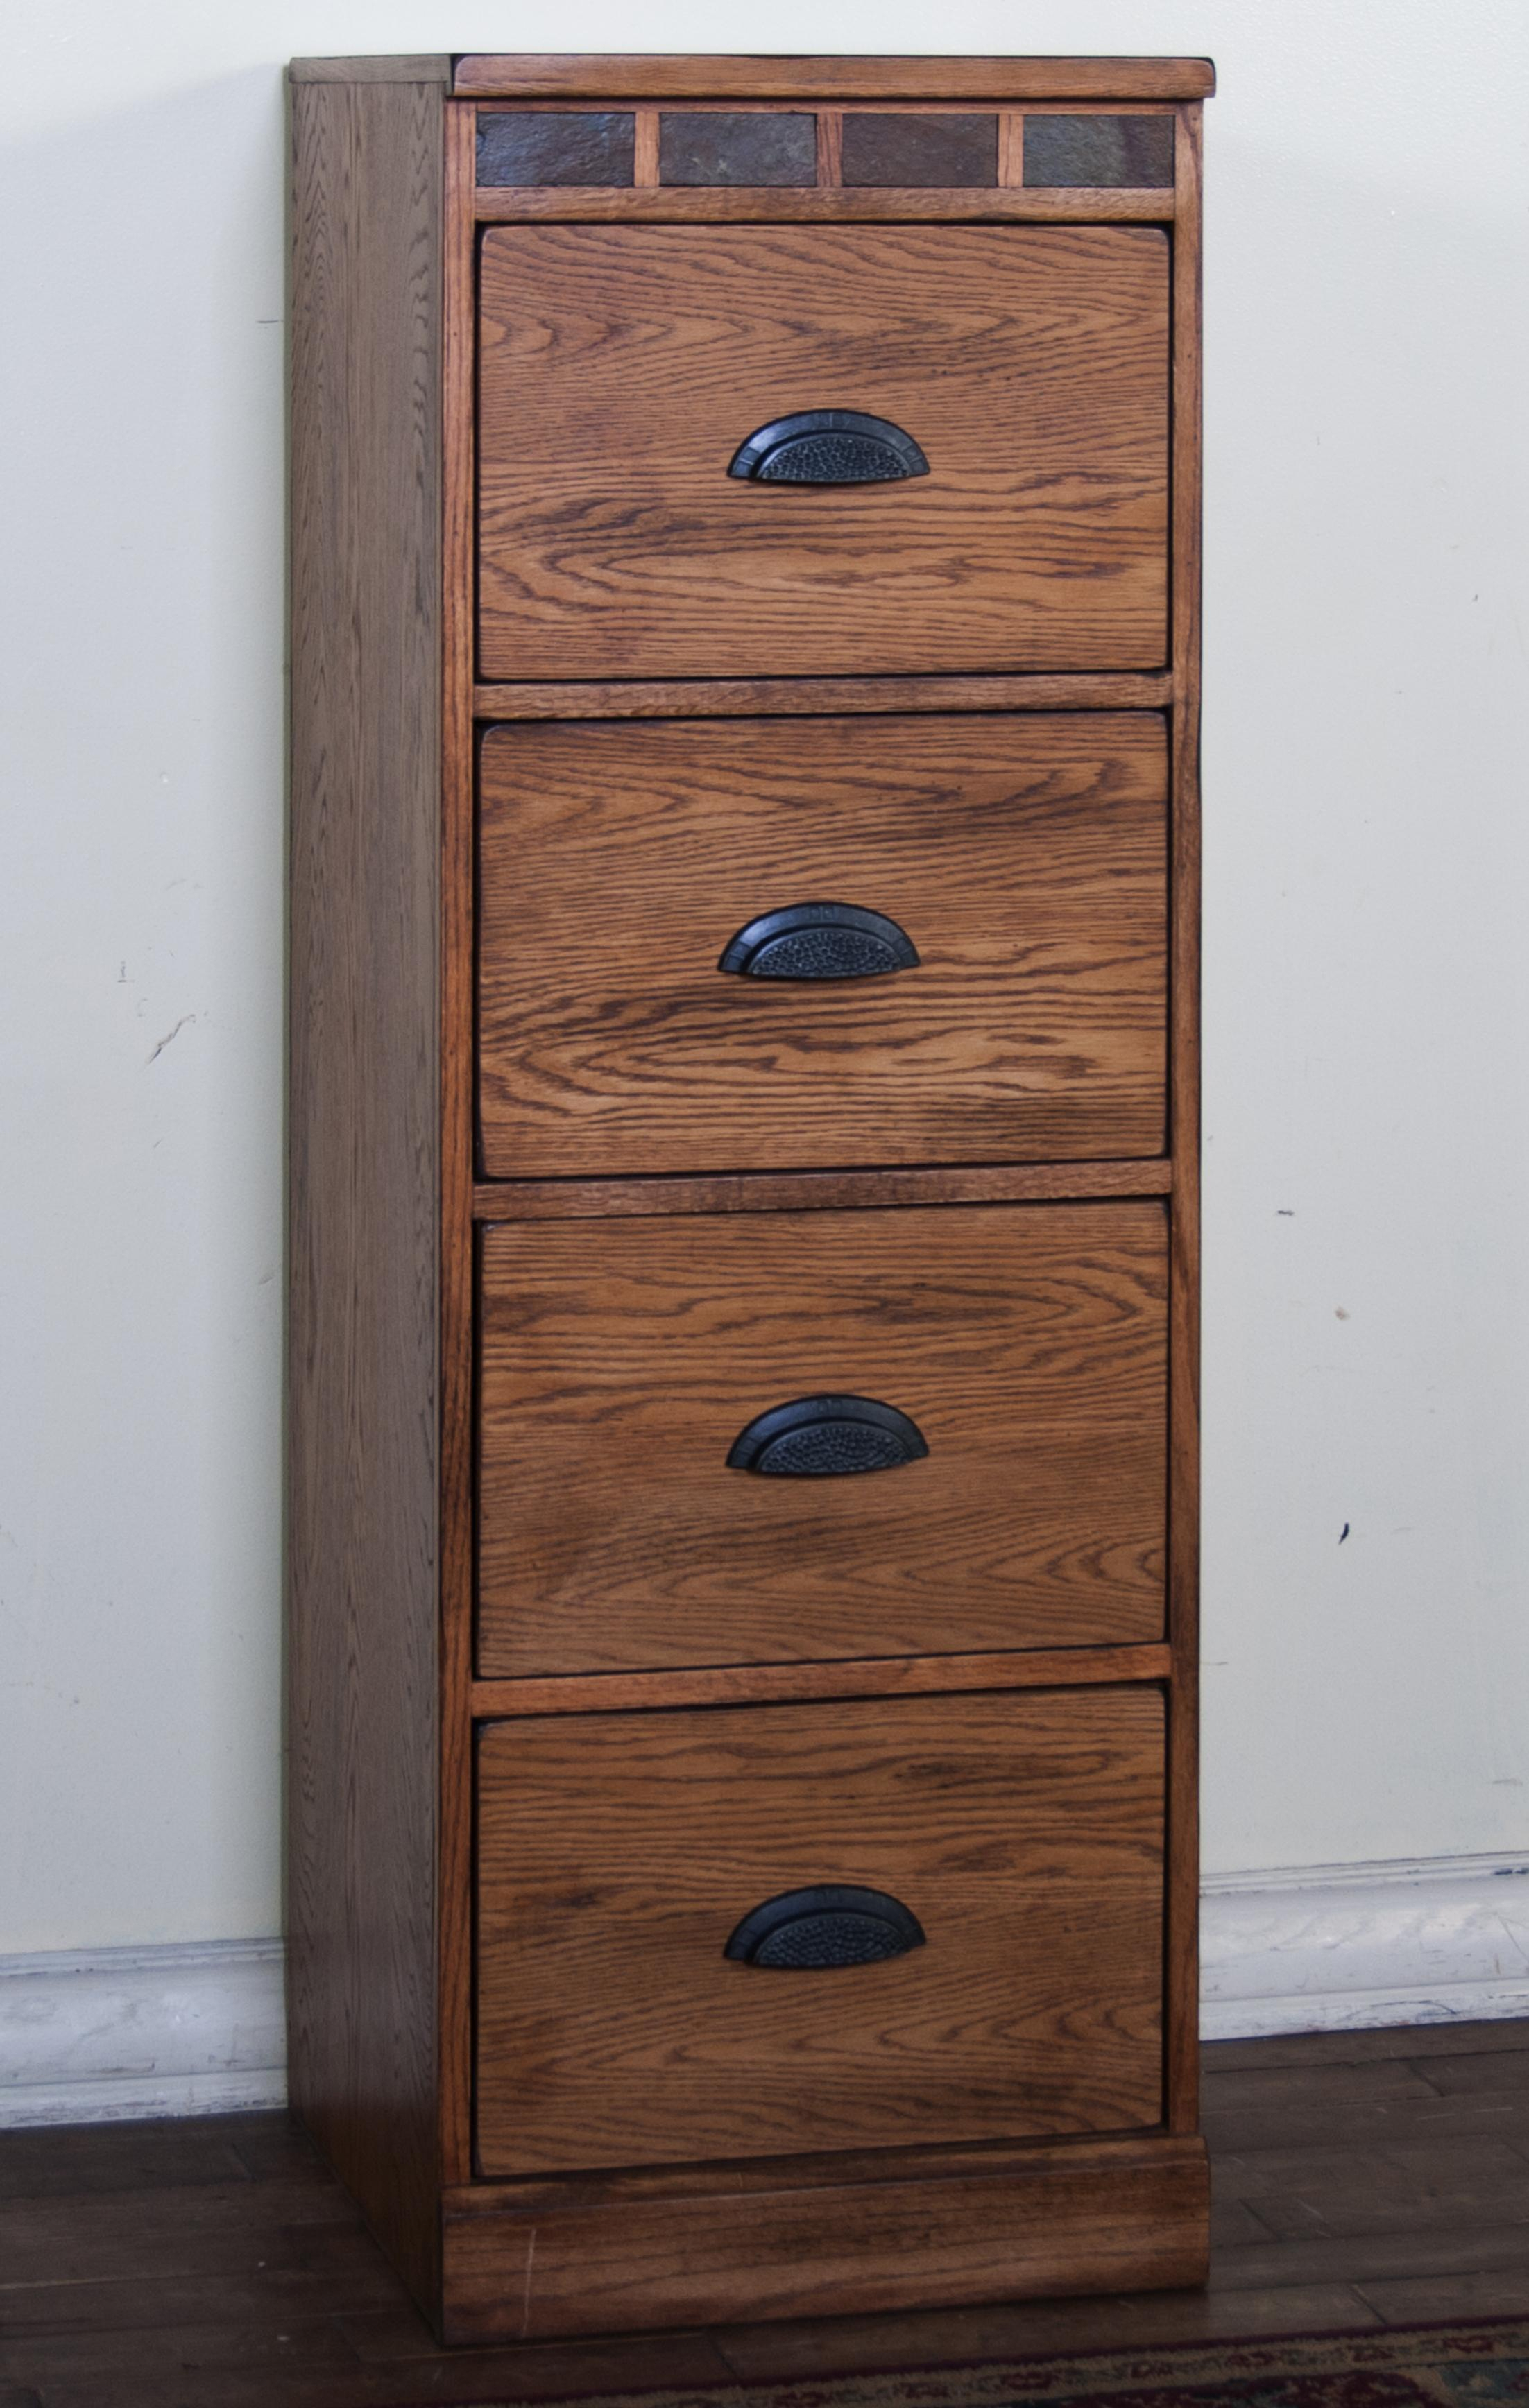 4 Drawer Filing Cabinet Wood Effect Drawer Design throughout size 2204 X 3472